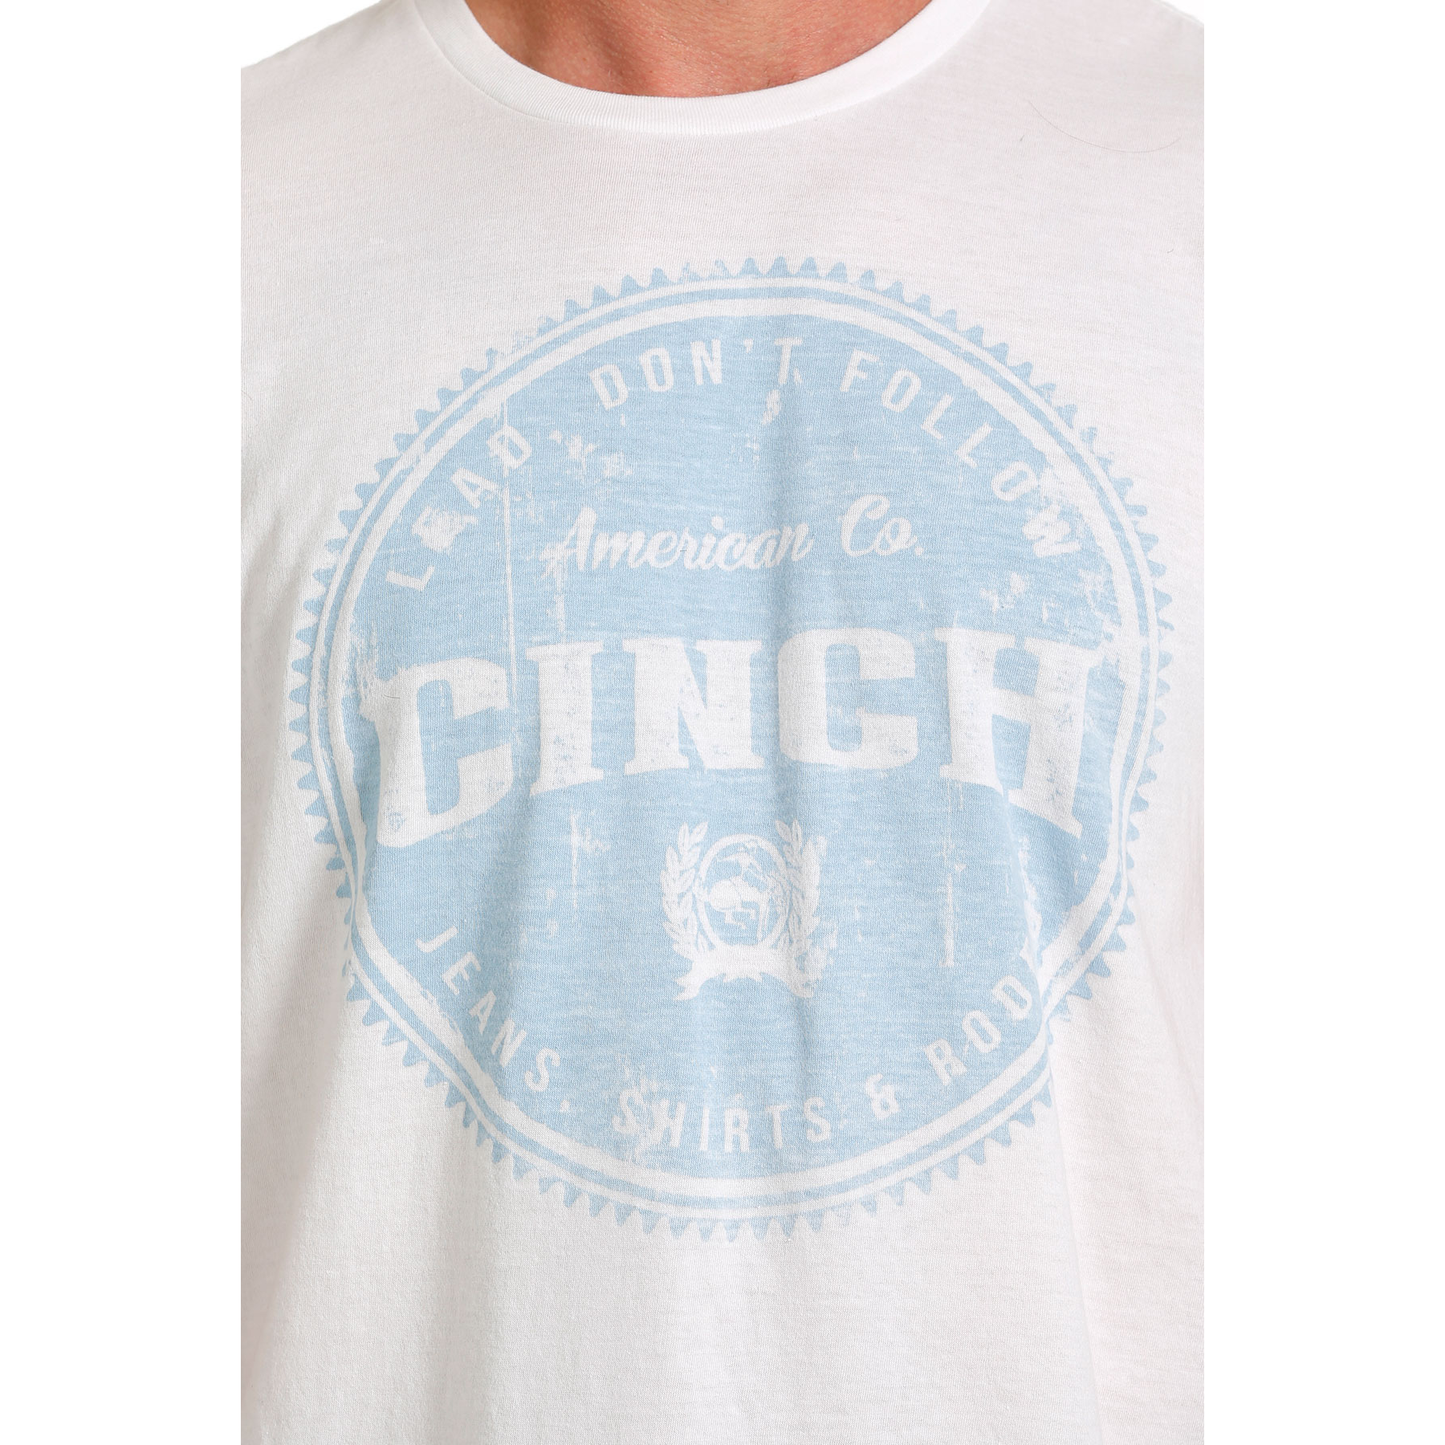 Cinch Men's White Faded "Lead, Don't Follow" Graphic T-Shirt MTT1690581